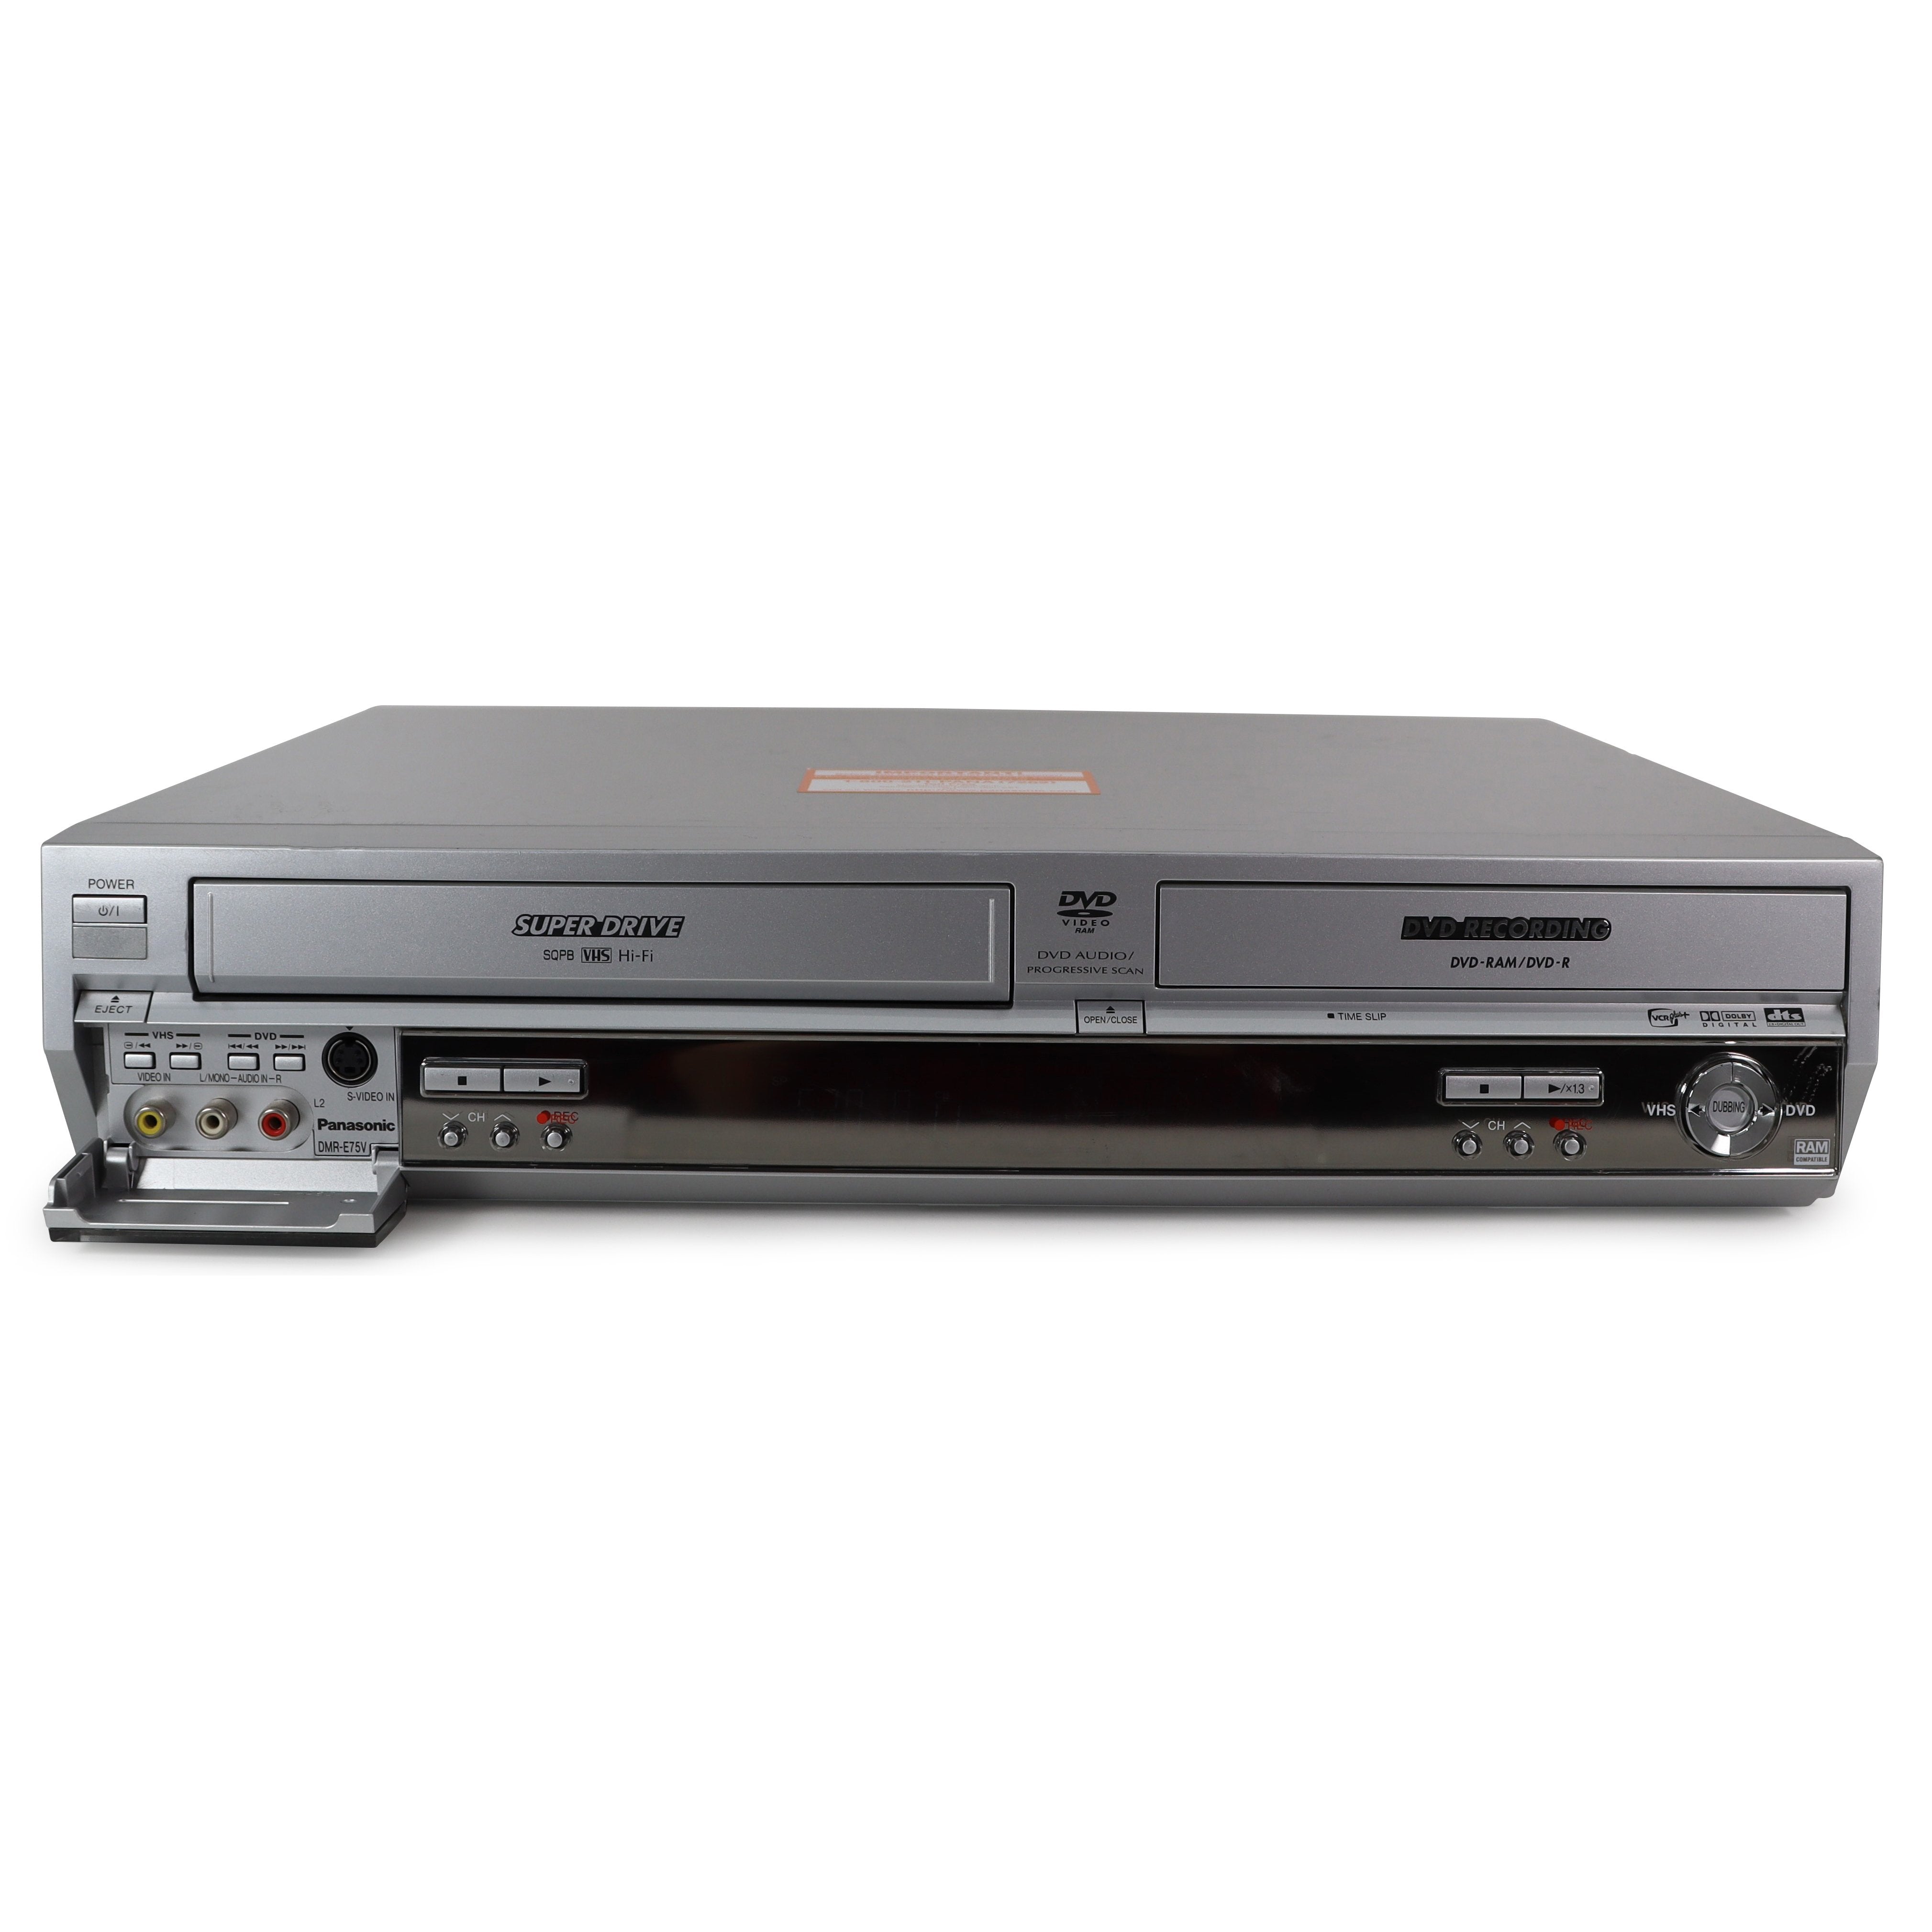 Panasonic DMR-EX95V VCR/HDD/DVD Recorder Combi – phsltd